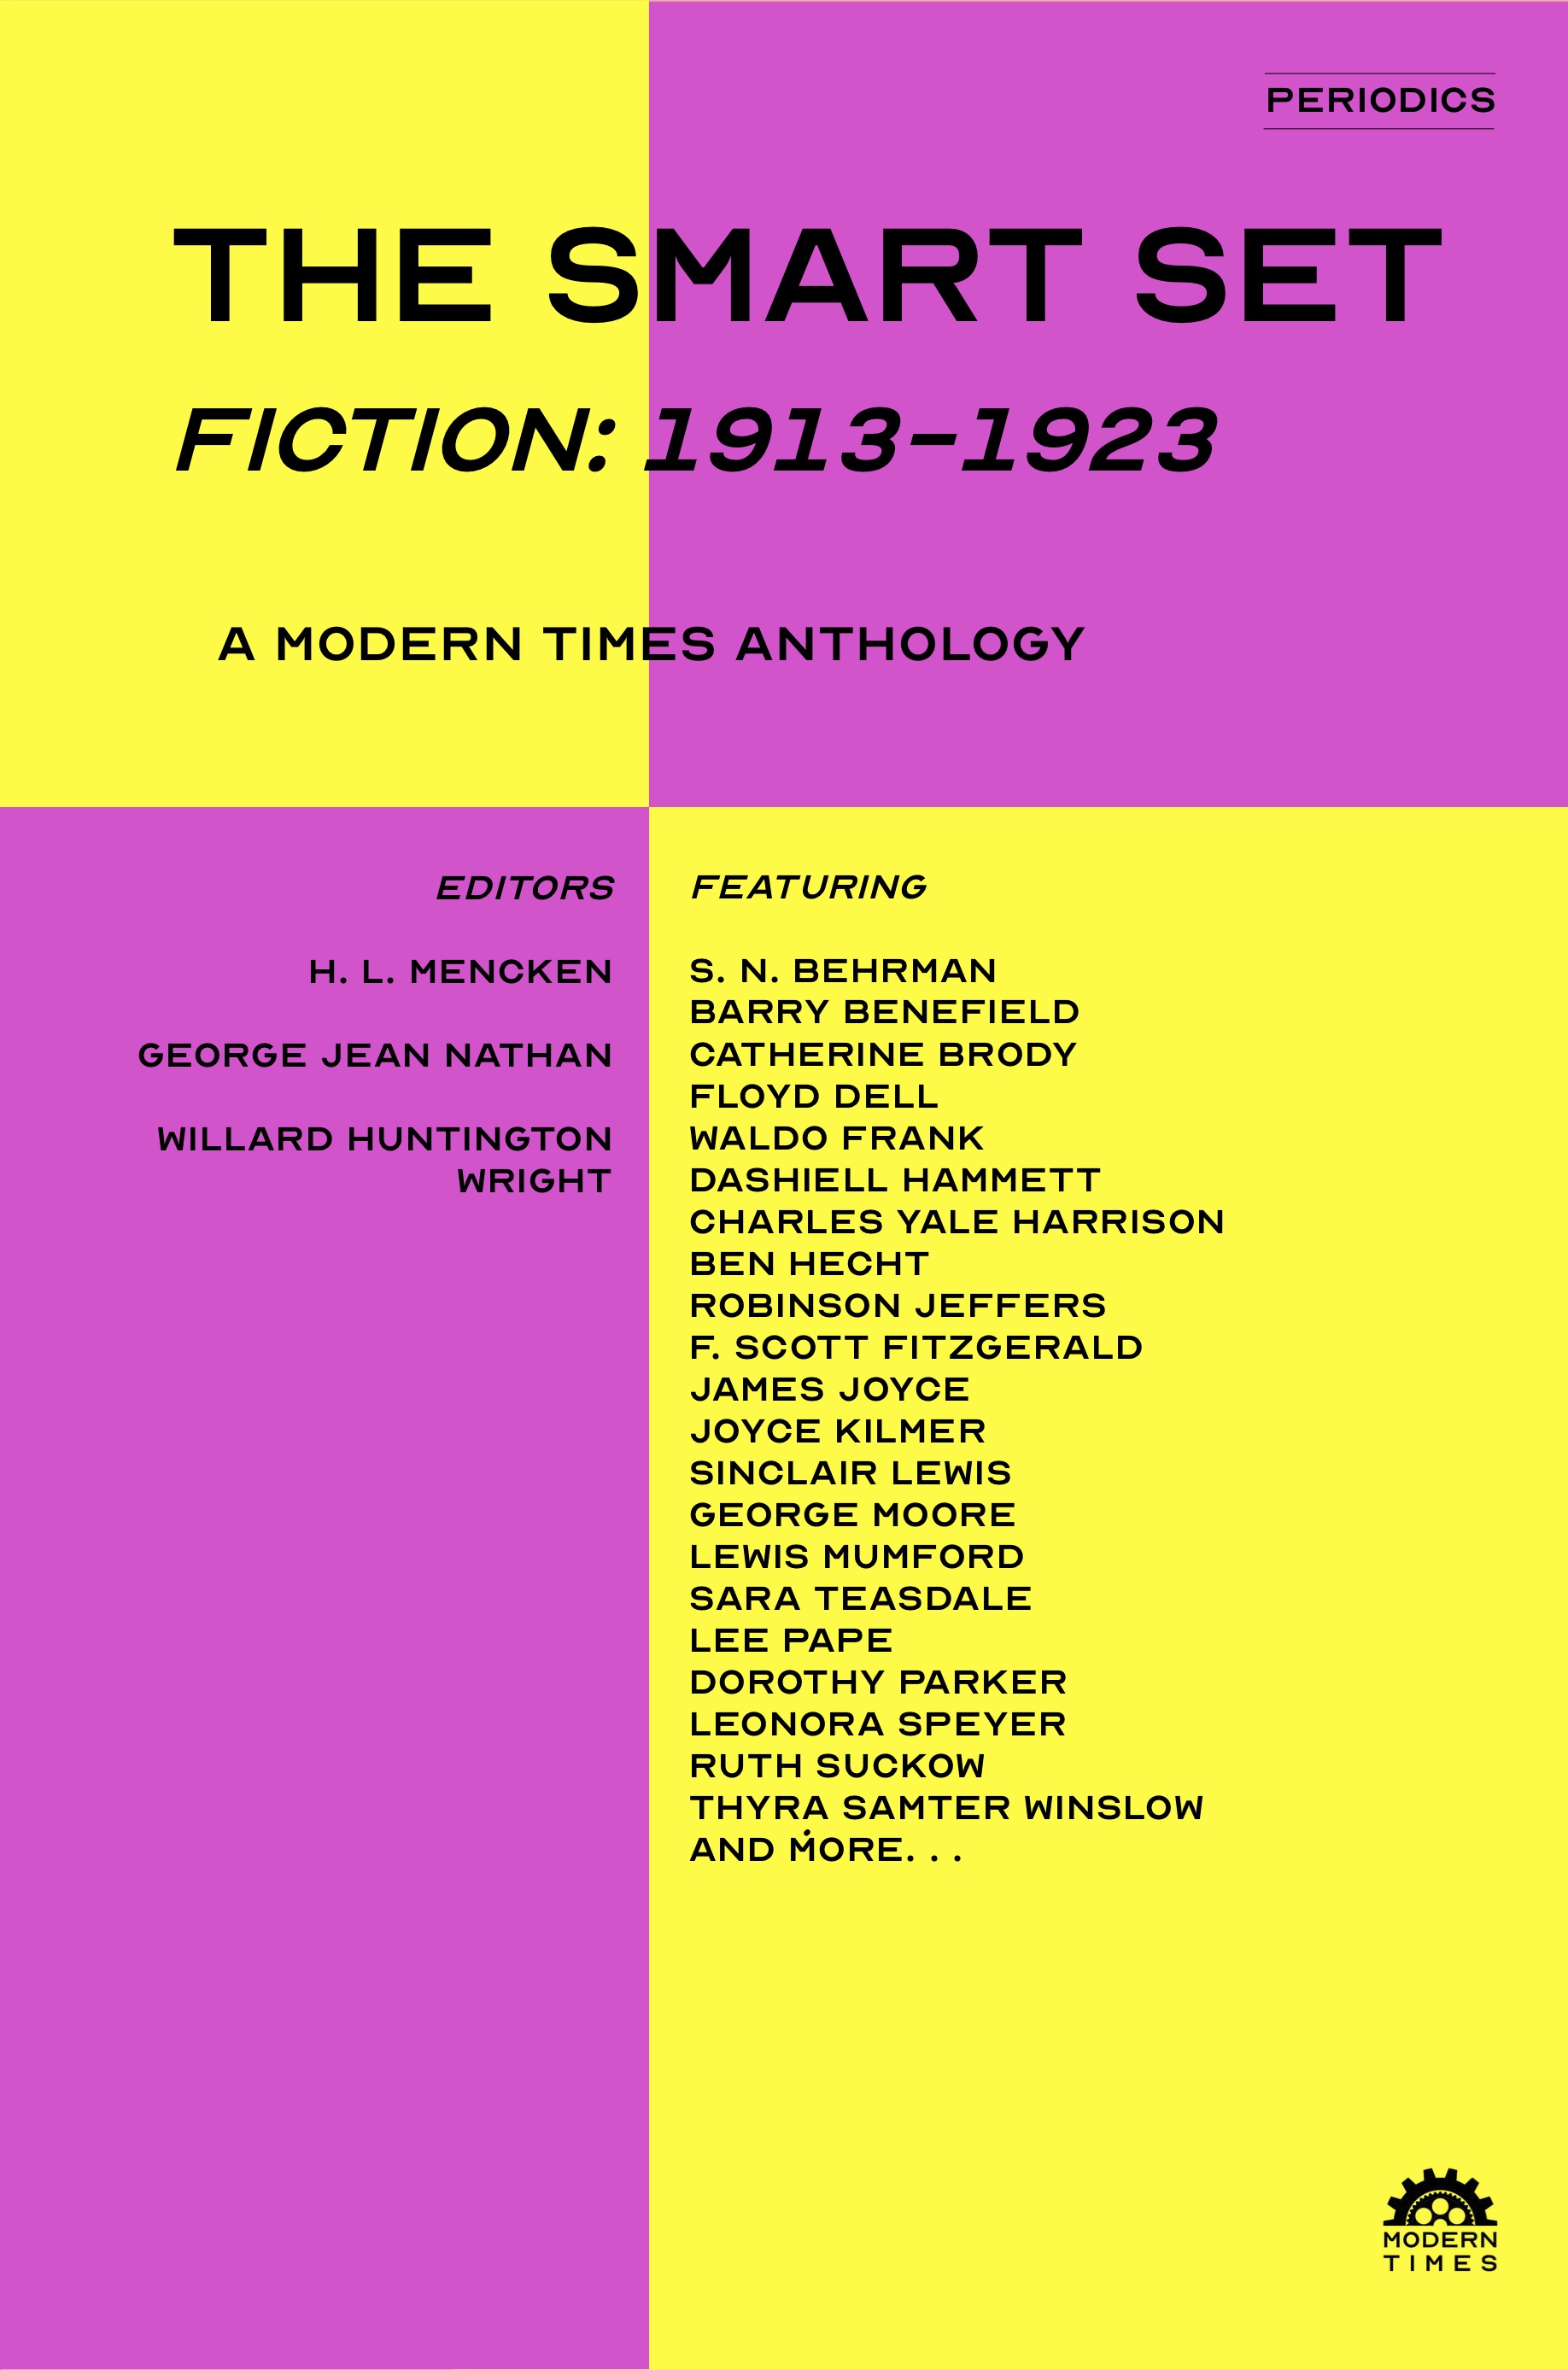 The Smart Set (Fiction 1913-1923): A Modern Times Anthology